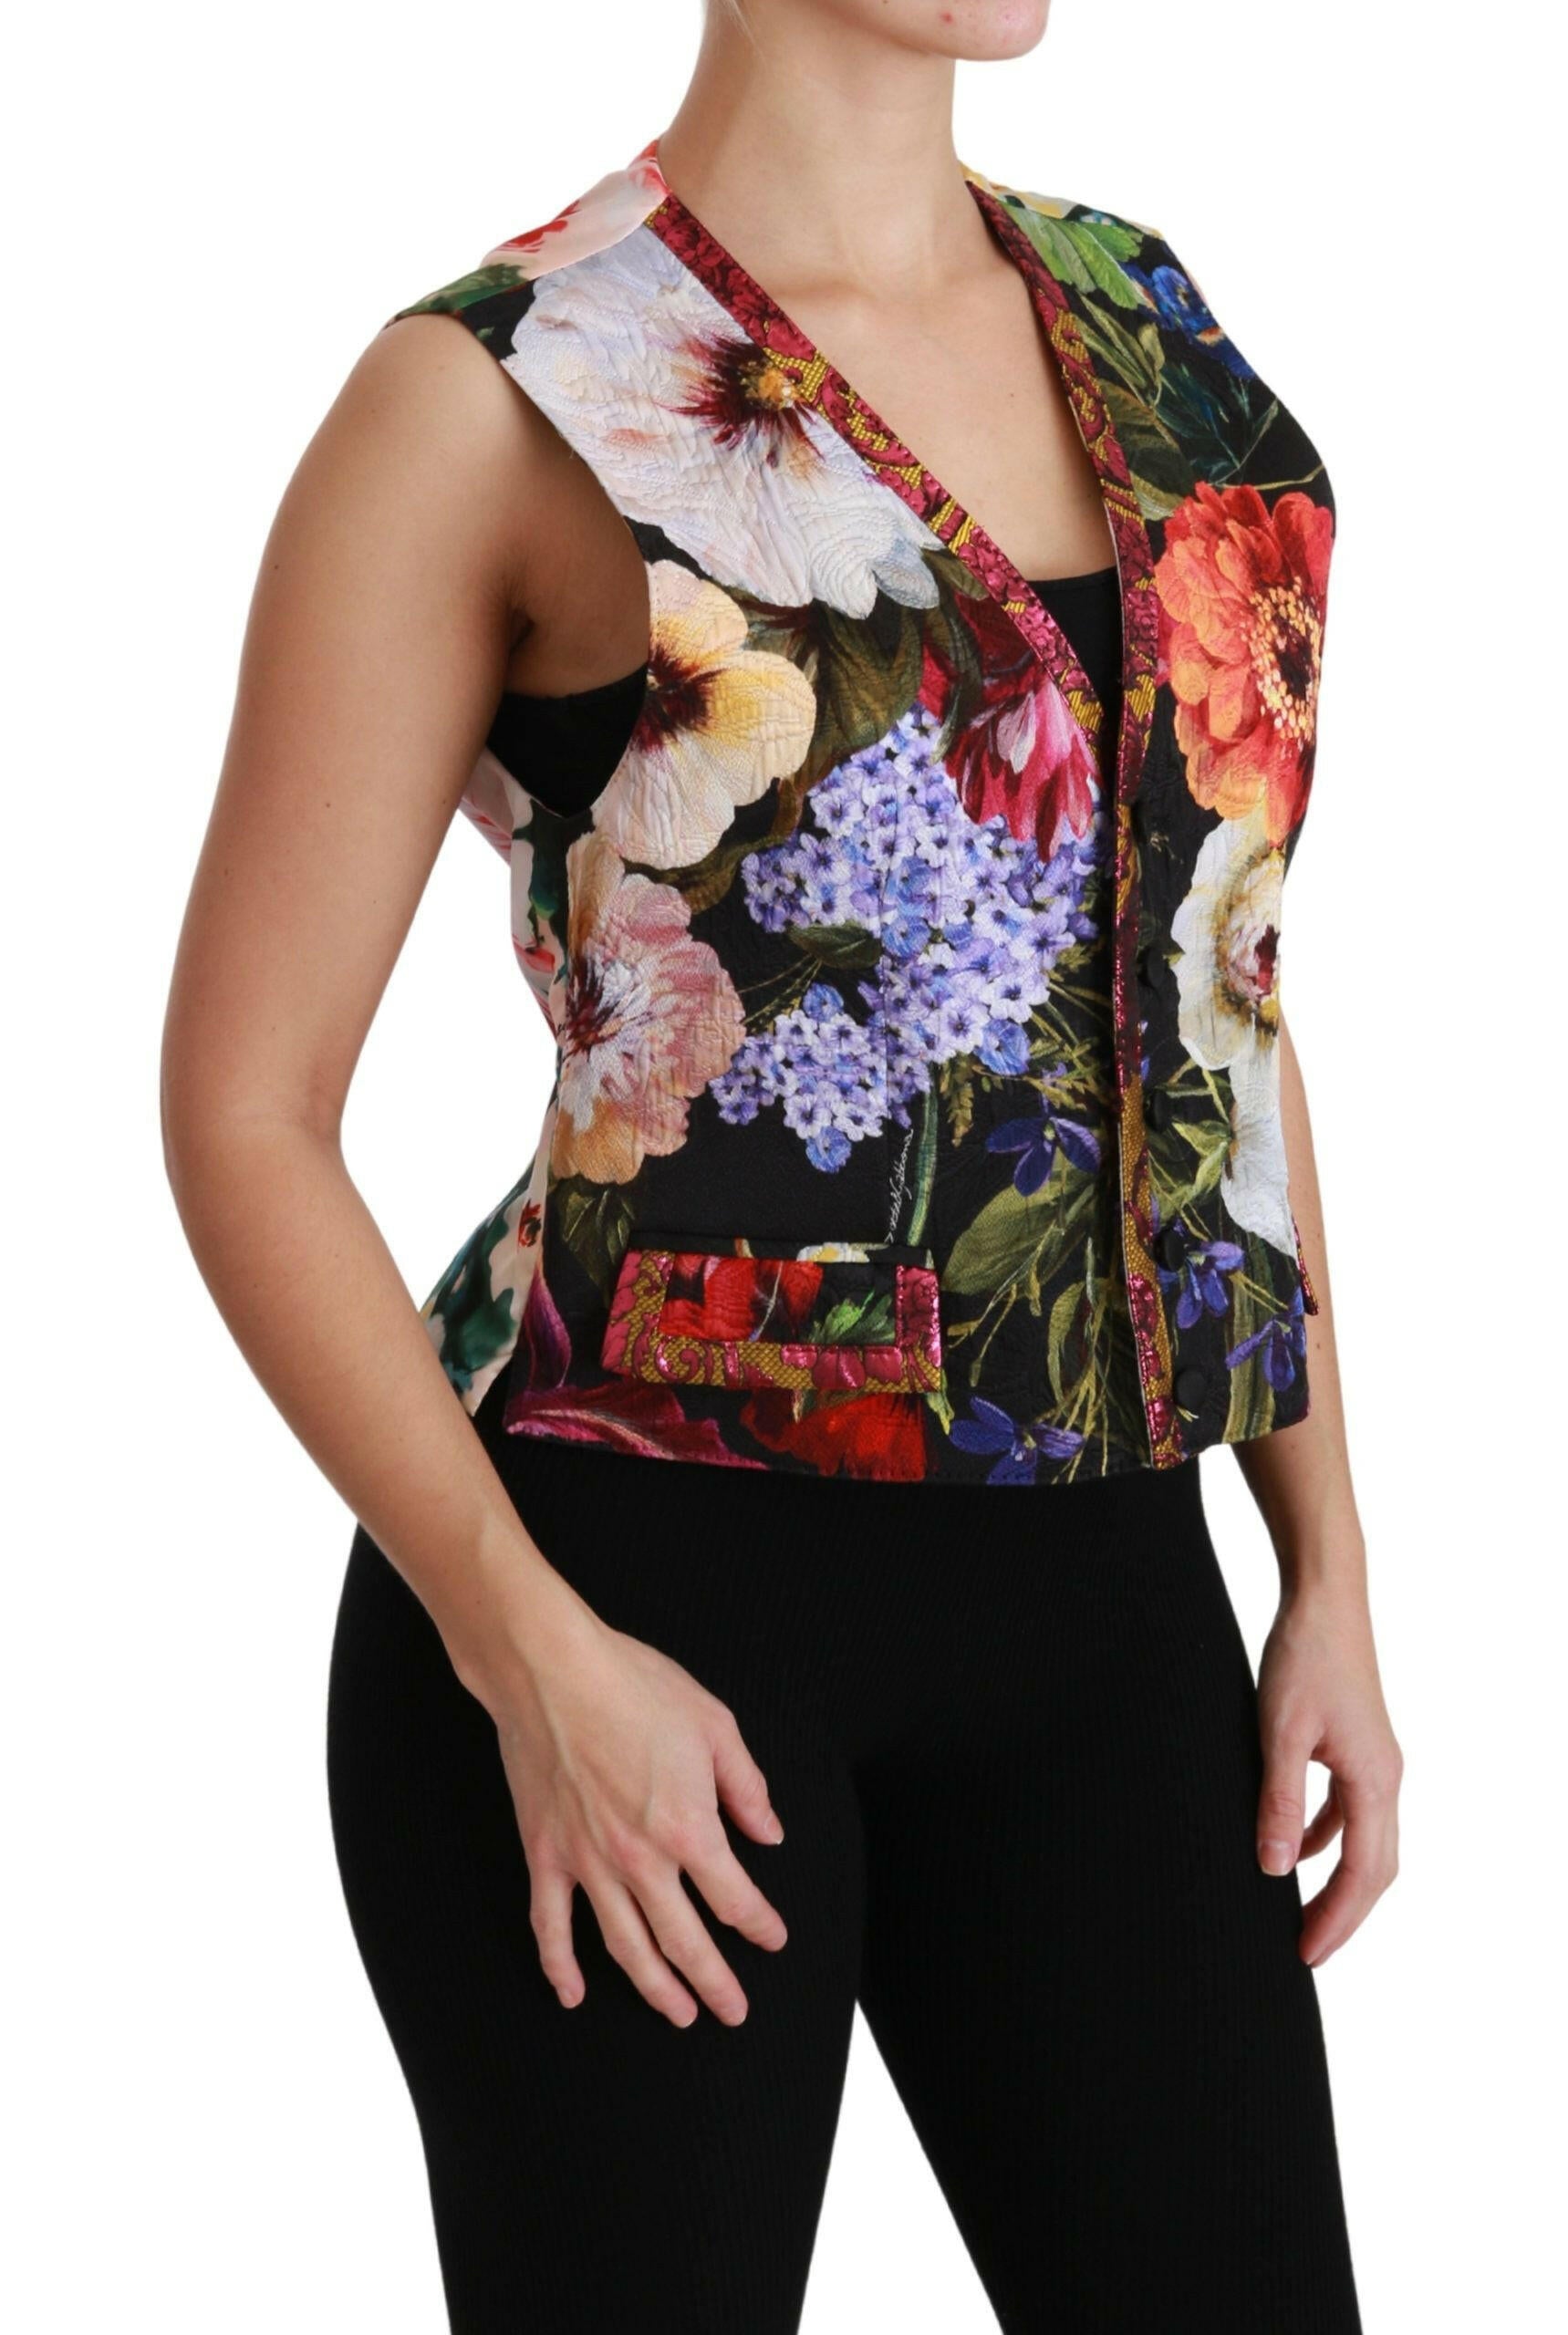 Dolce & Gabbana Multicolor Floral Sleeveless Waistcoat Top Vest - GENUINE AUTHENTIC BRAND LLC  